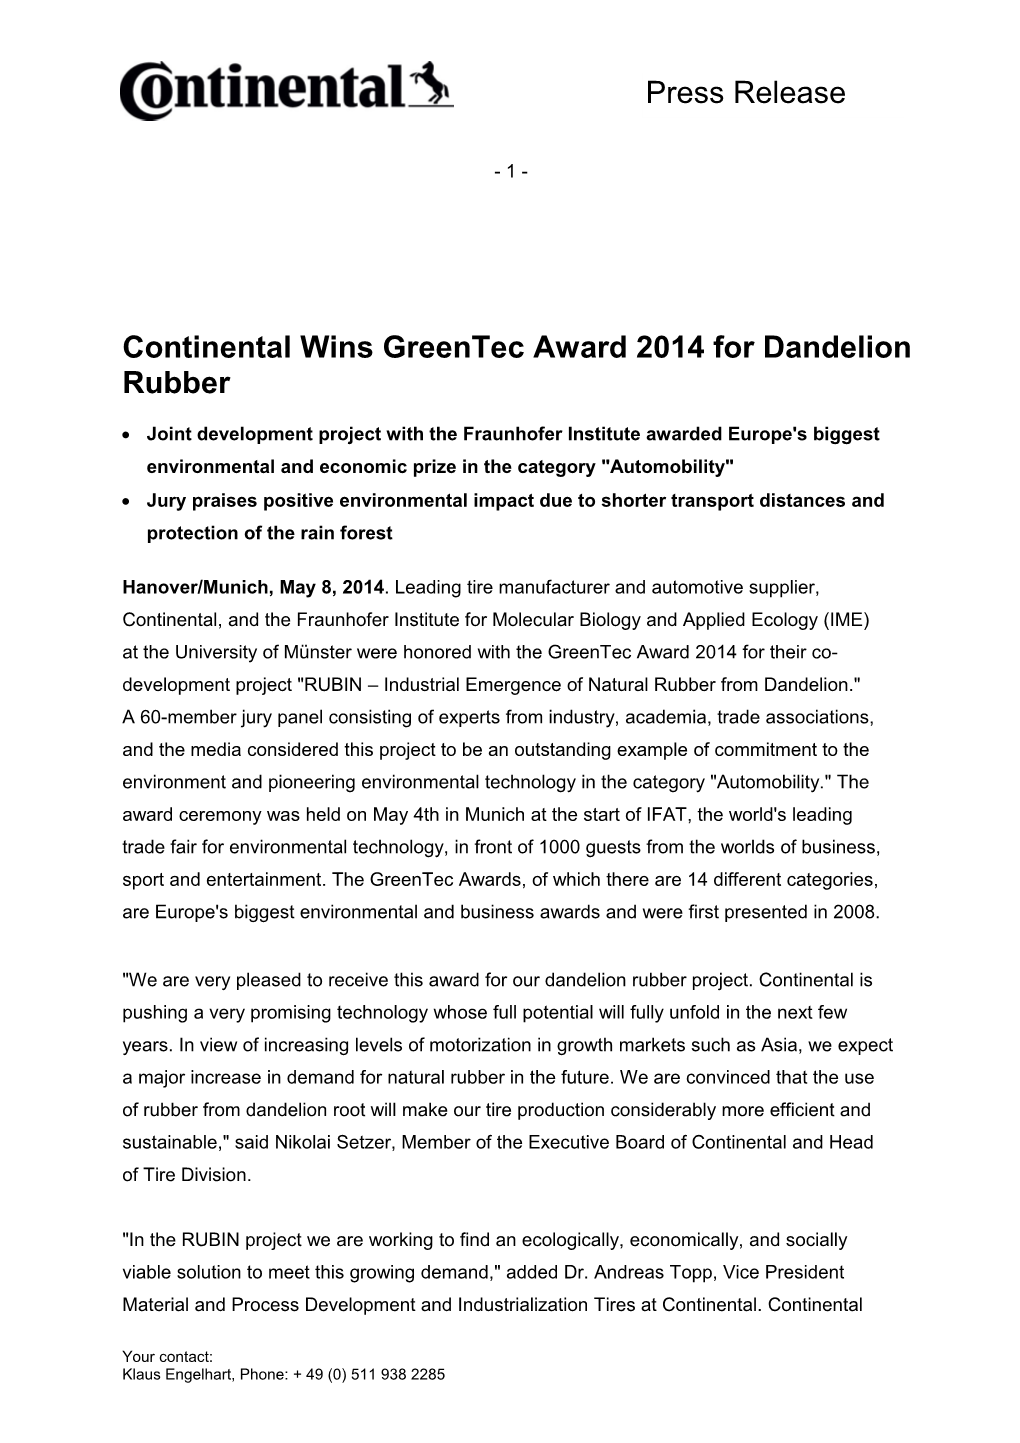 Continental Wins Greentec Award 2014 for Dandelion Rubber